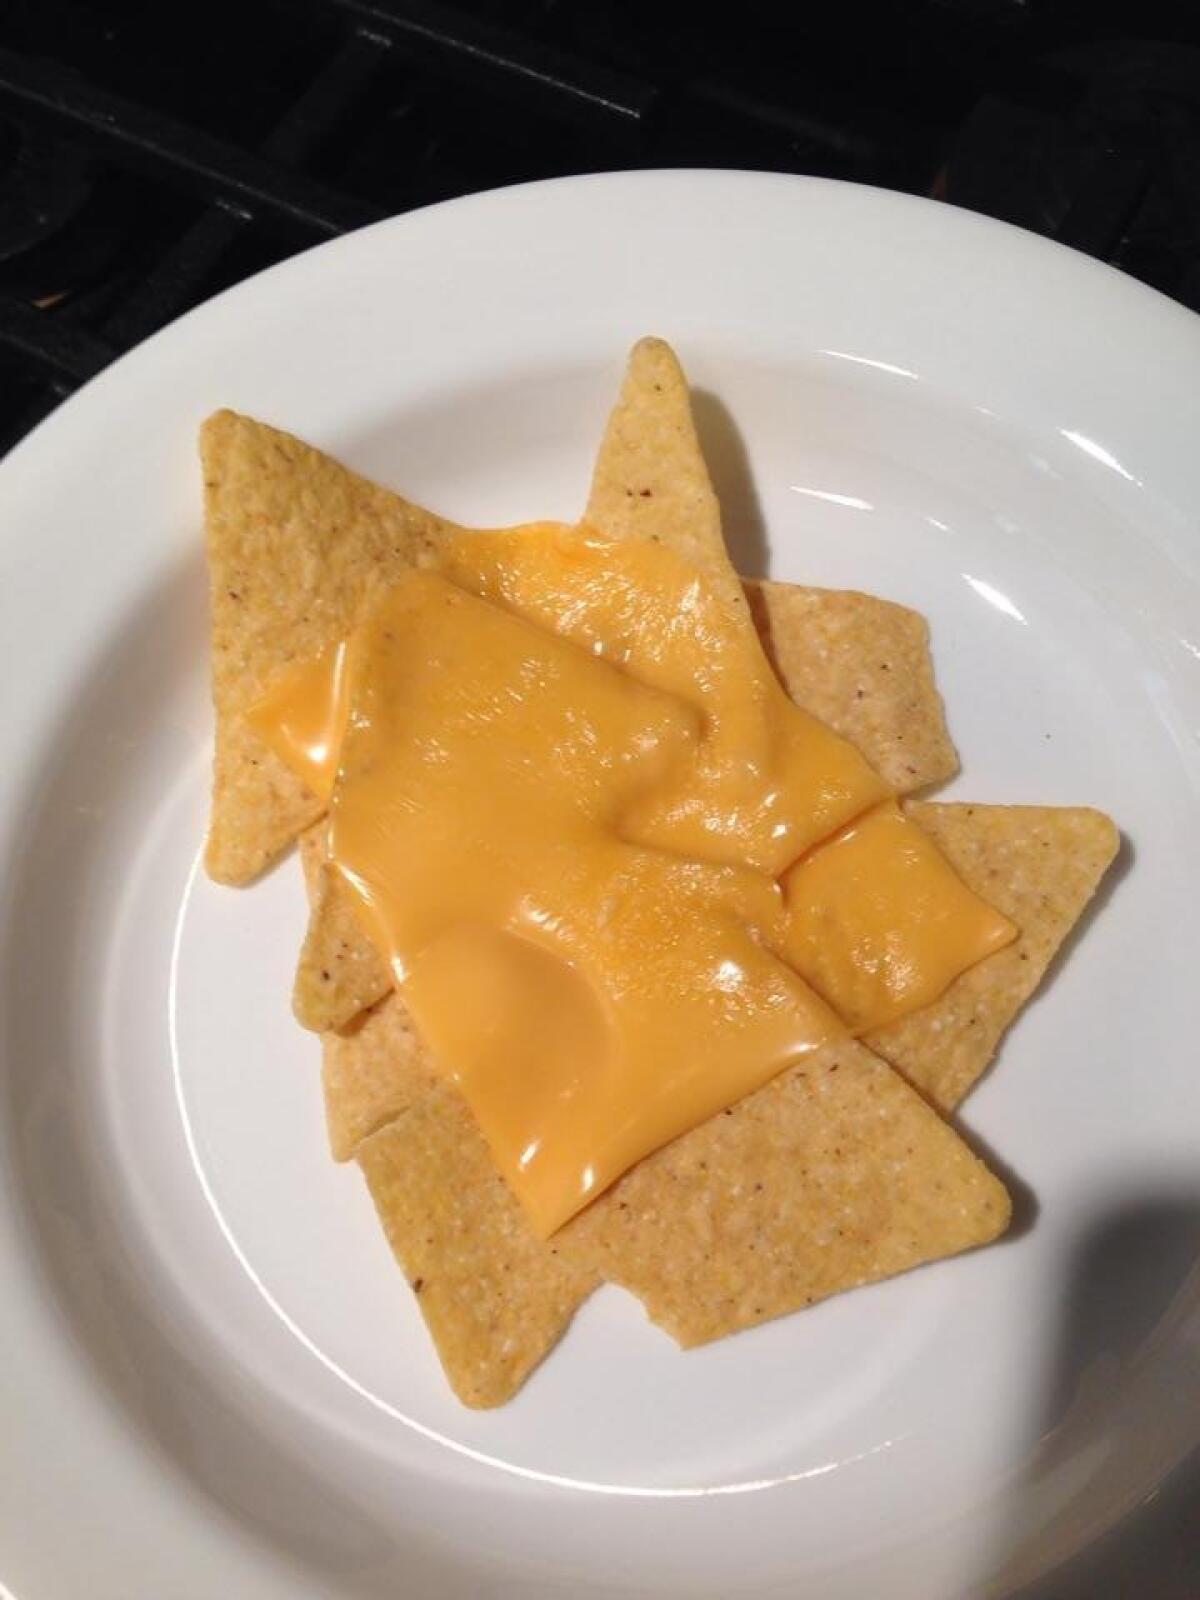 A plate of bad nachos